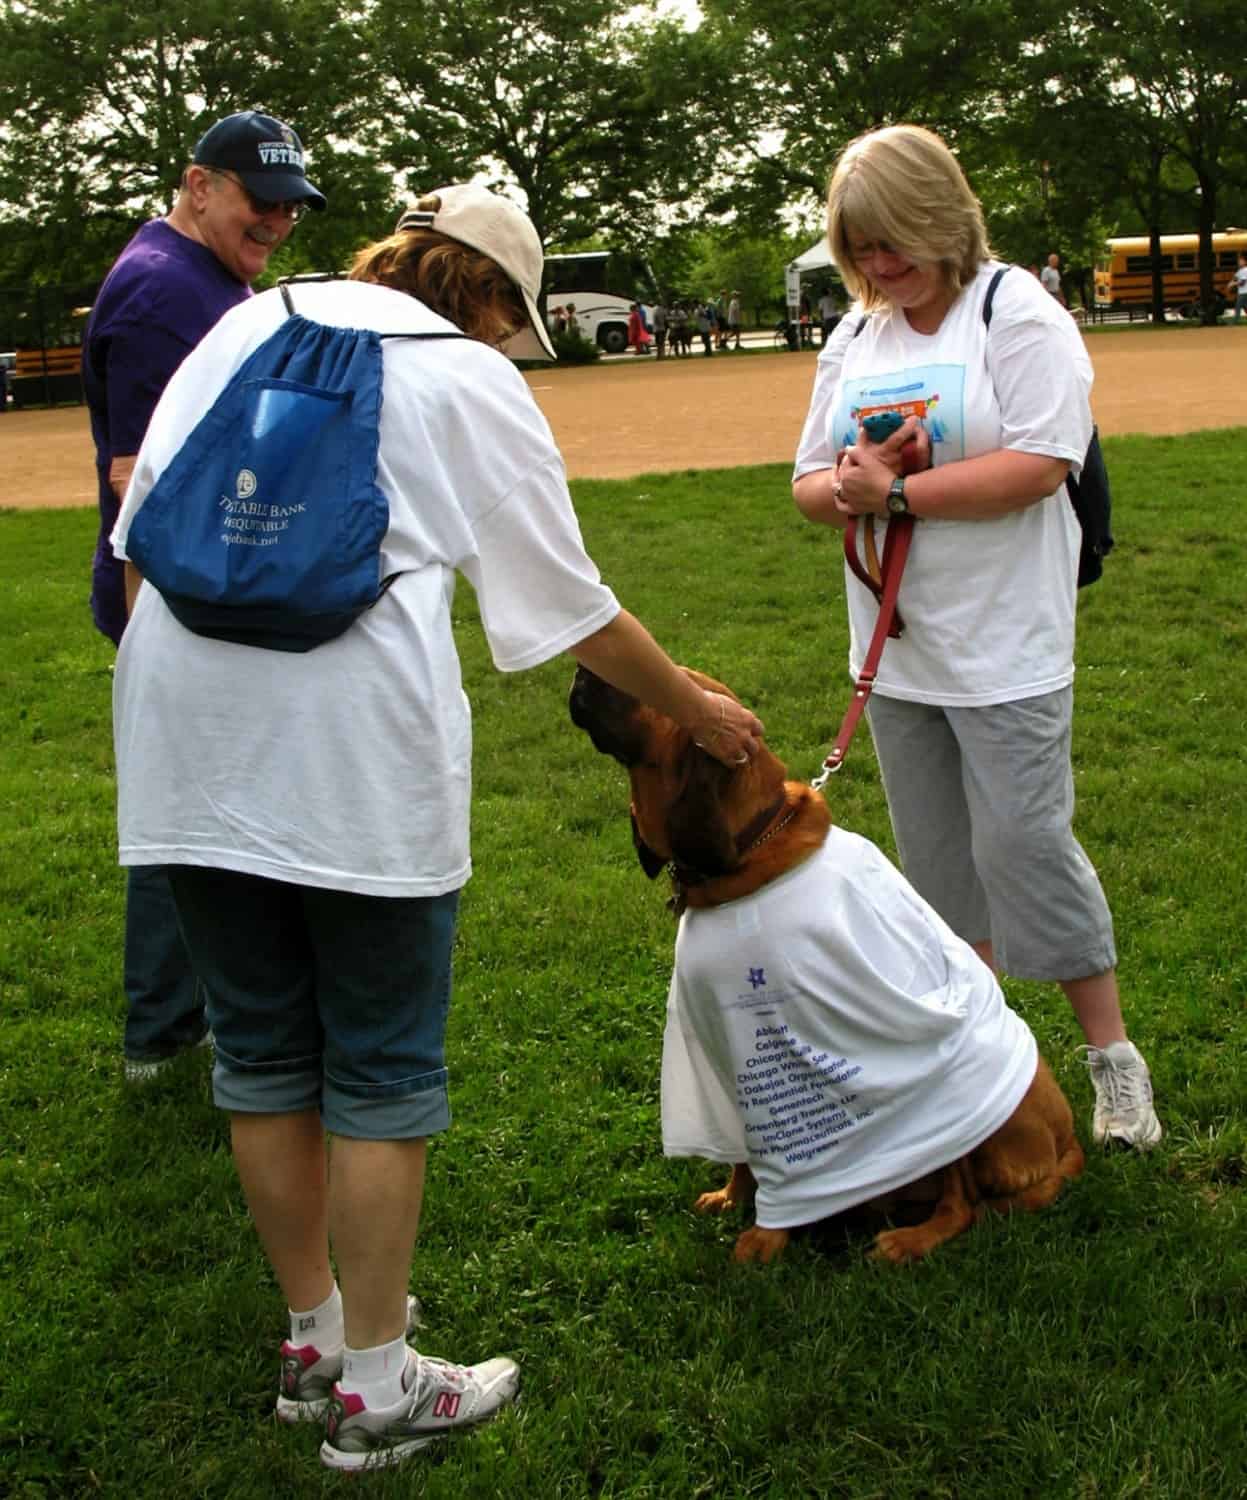 Dogs in Grant Park - Chicago, IL